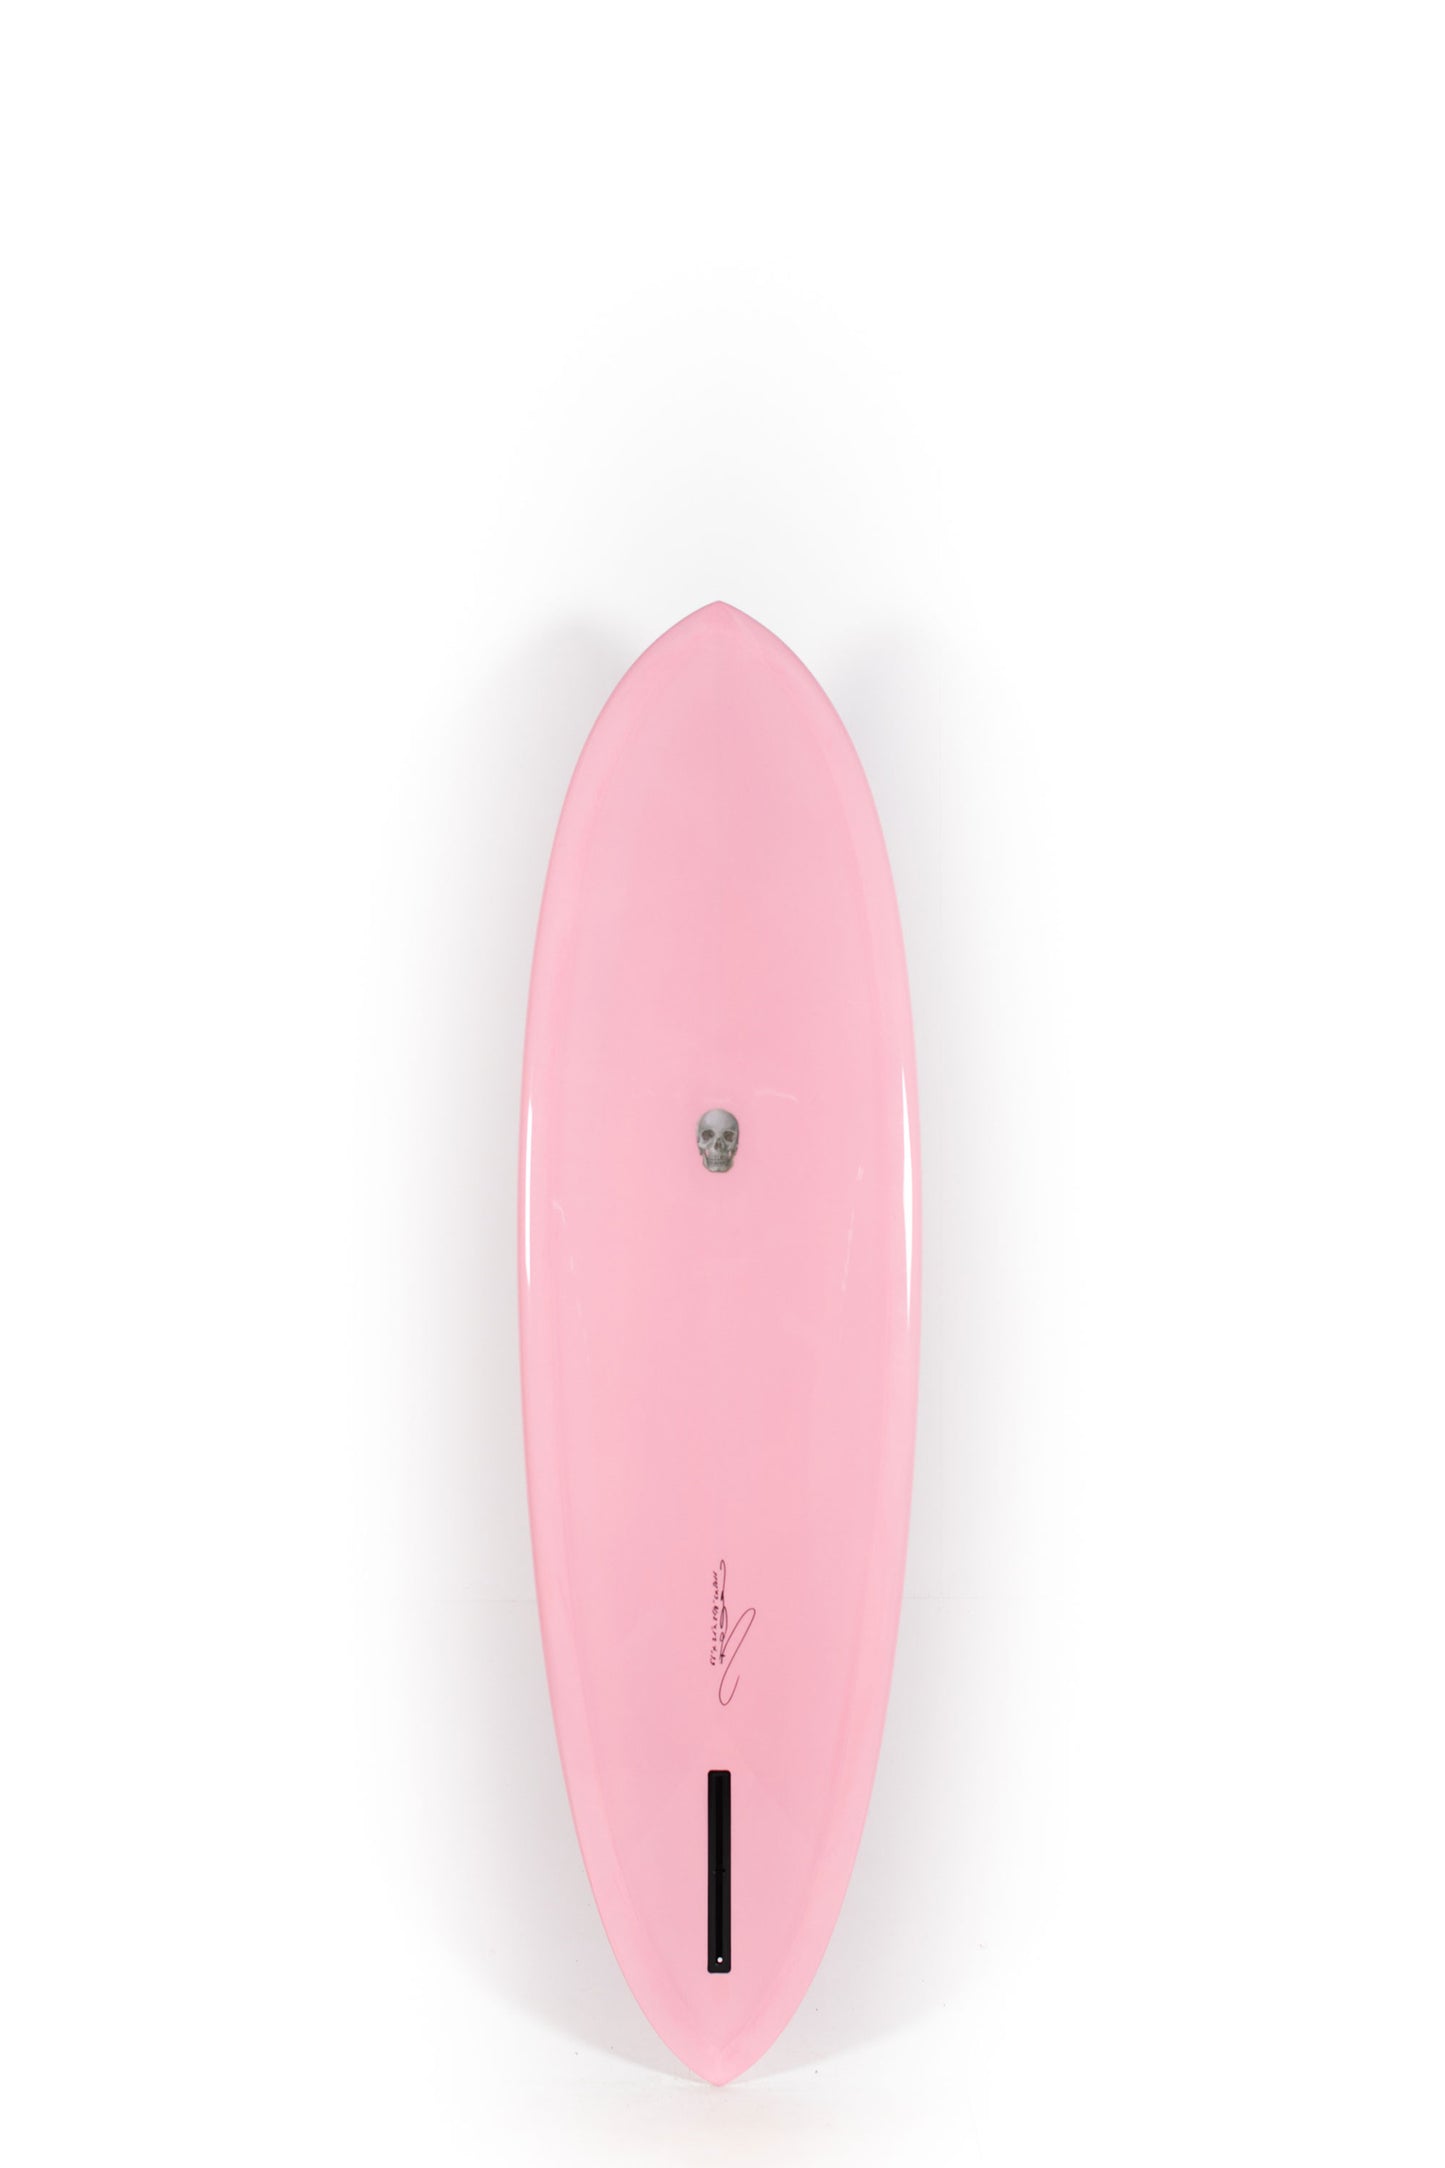 Pukas Surf Shop - Christenson Surfboards - C-BUCKET - 6'6" x 21 x 2 5/8 - CX05011